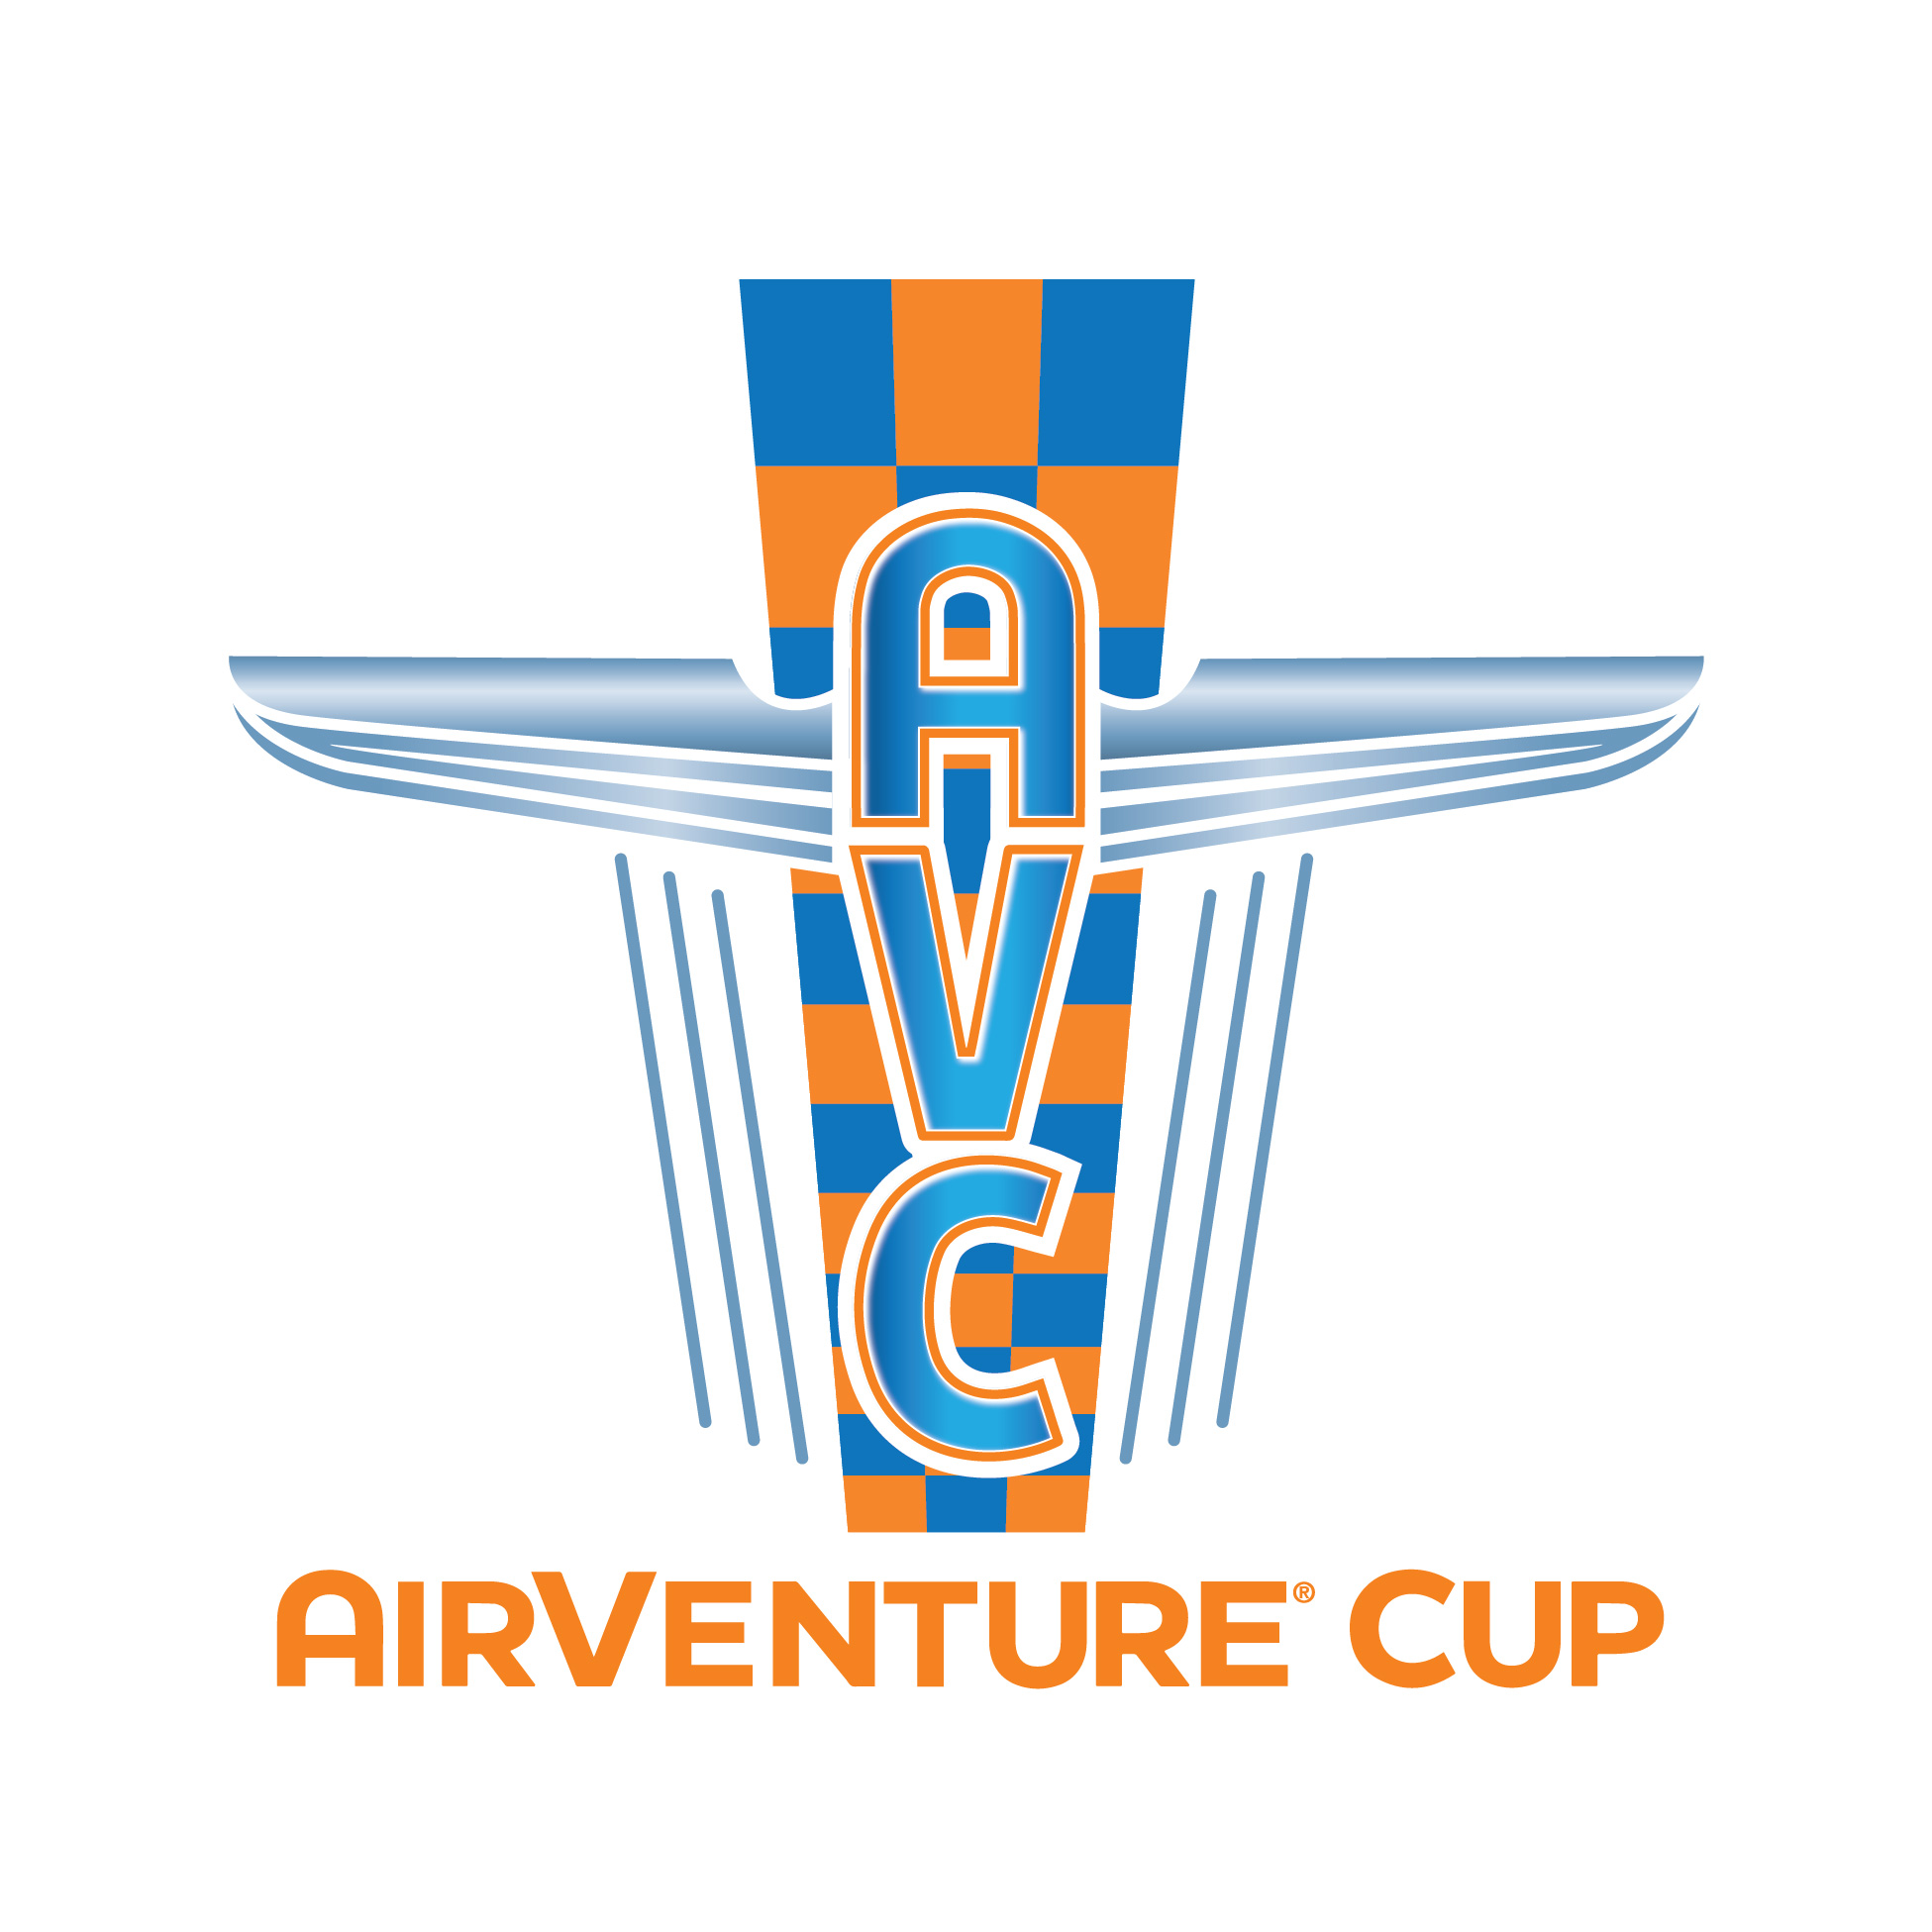 airventure cup logo